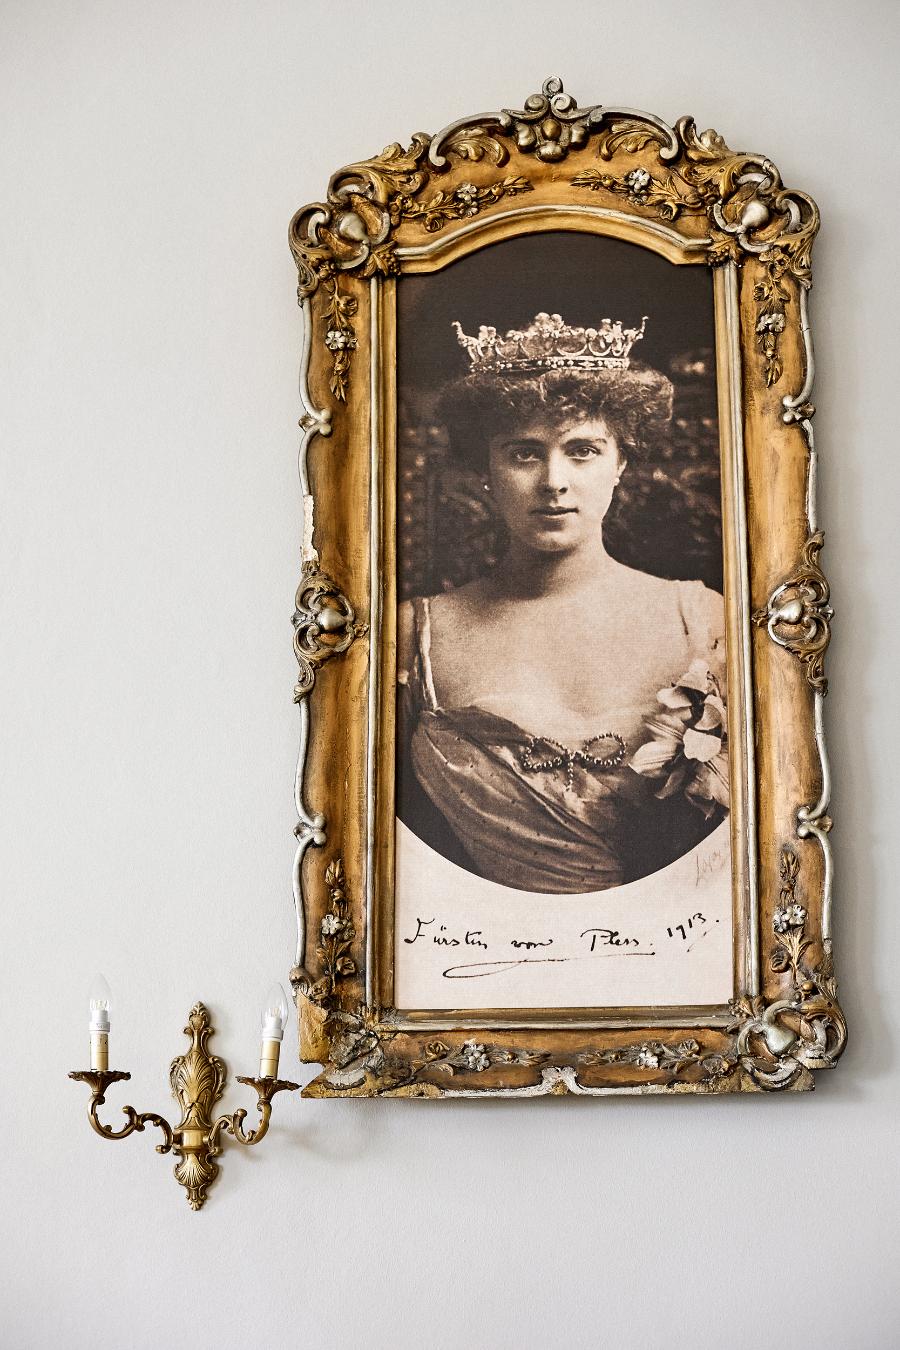 Maria Teresa Oliwia Hochberg von Pless, księżna pszczyńska, hrabina von Hochberg, baronowa na Książu, zwana Daisy (Fot. proksaphotography.com)